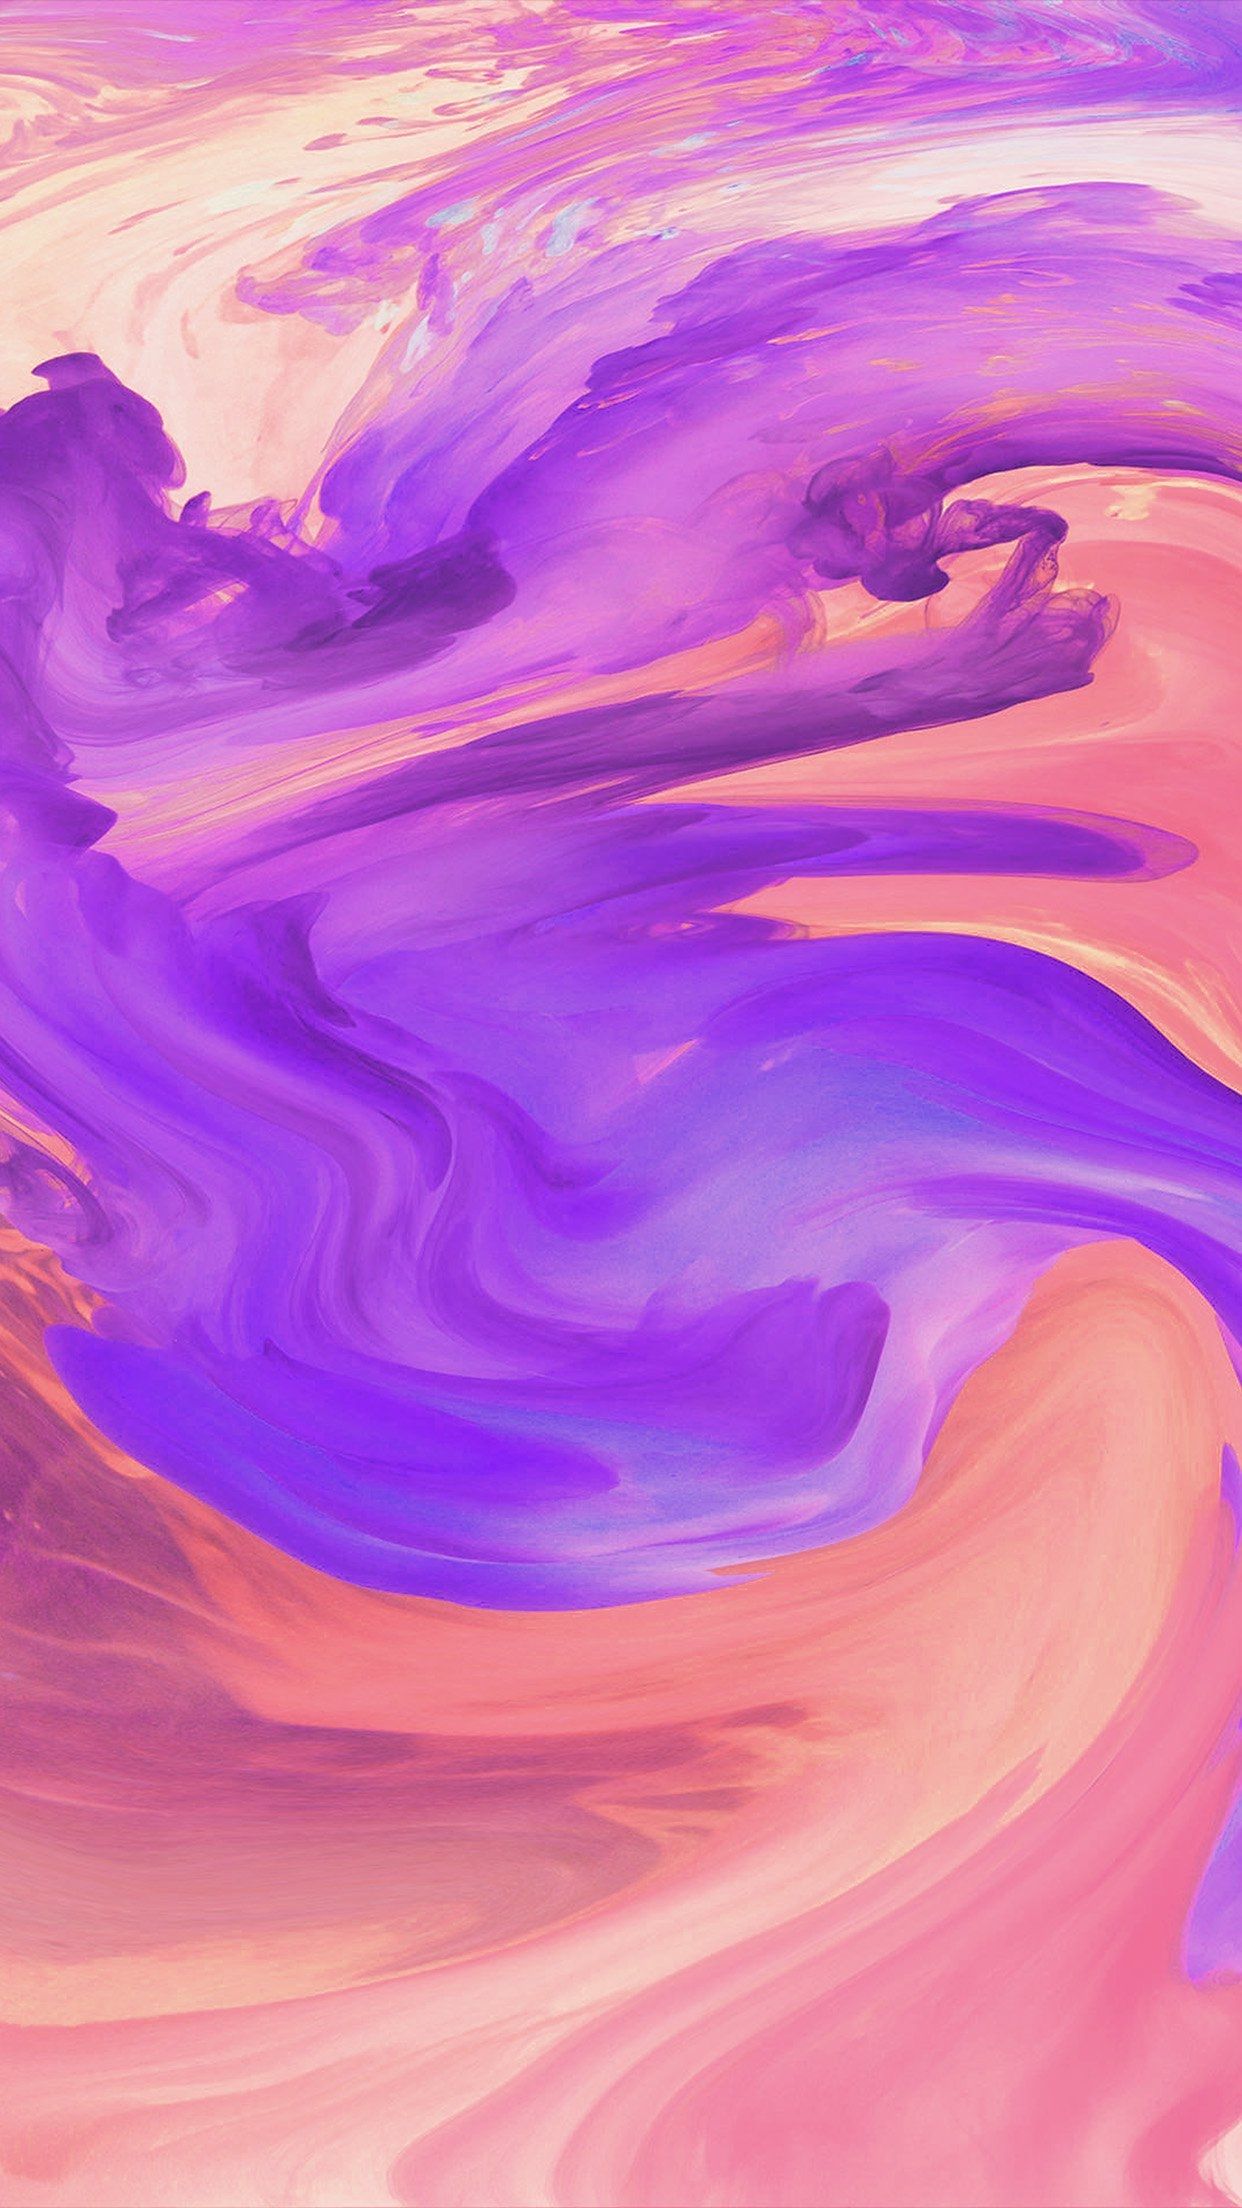 Hurricane swirl abstract art paint purple pattern Download Free